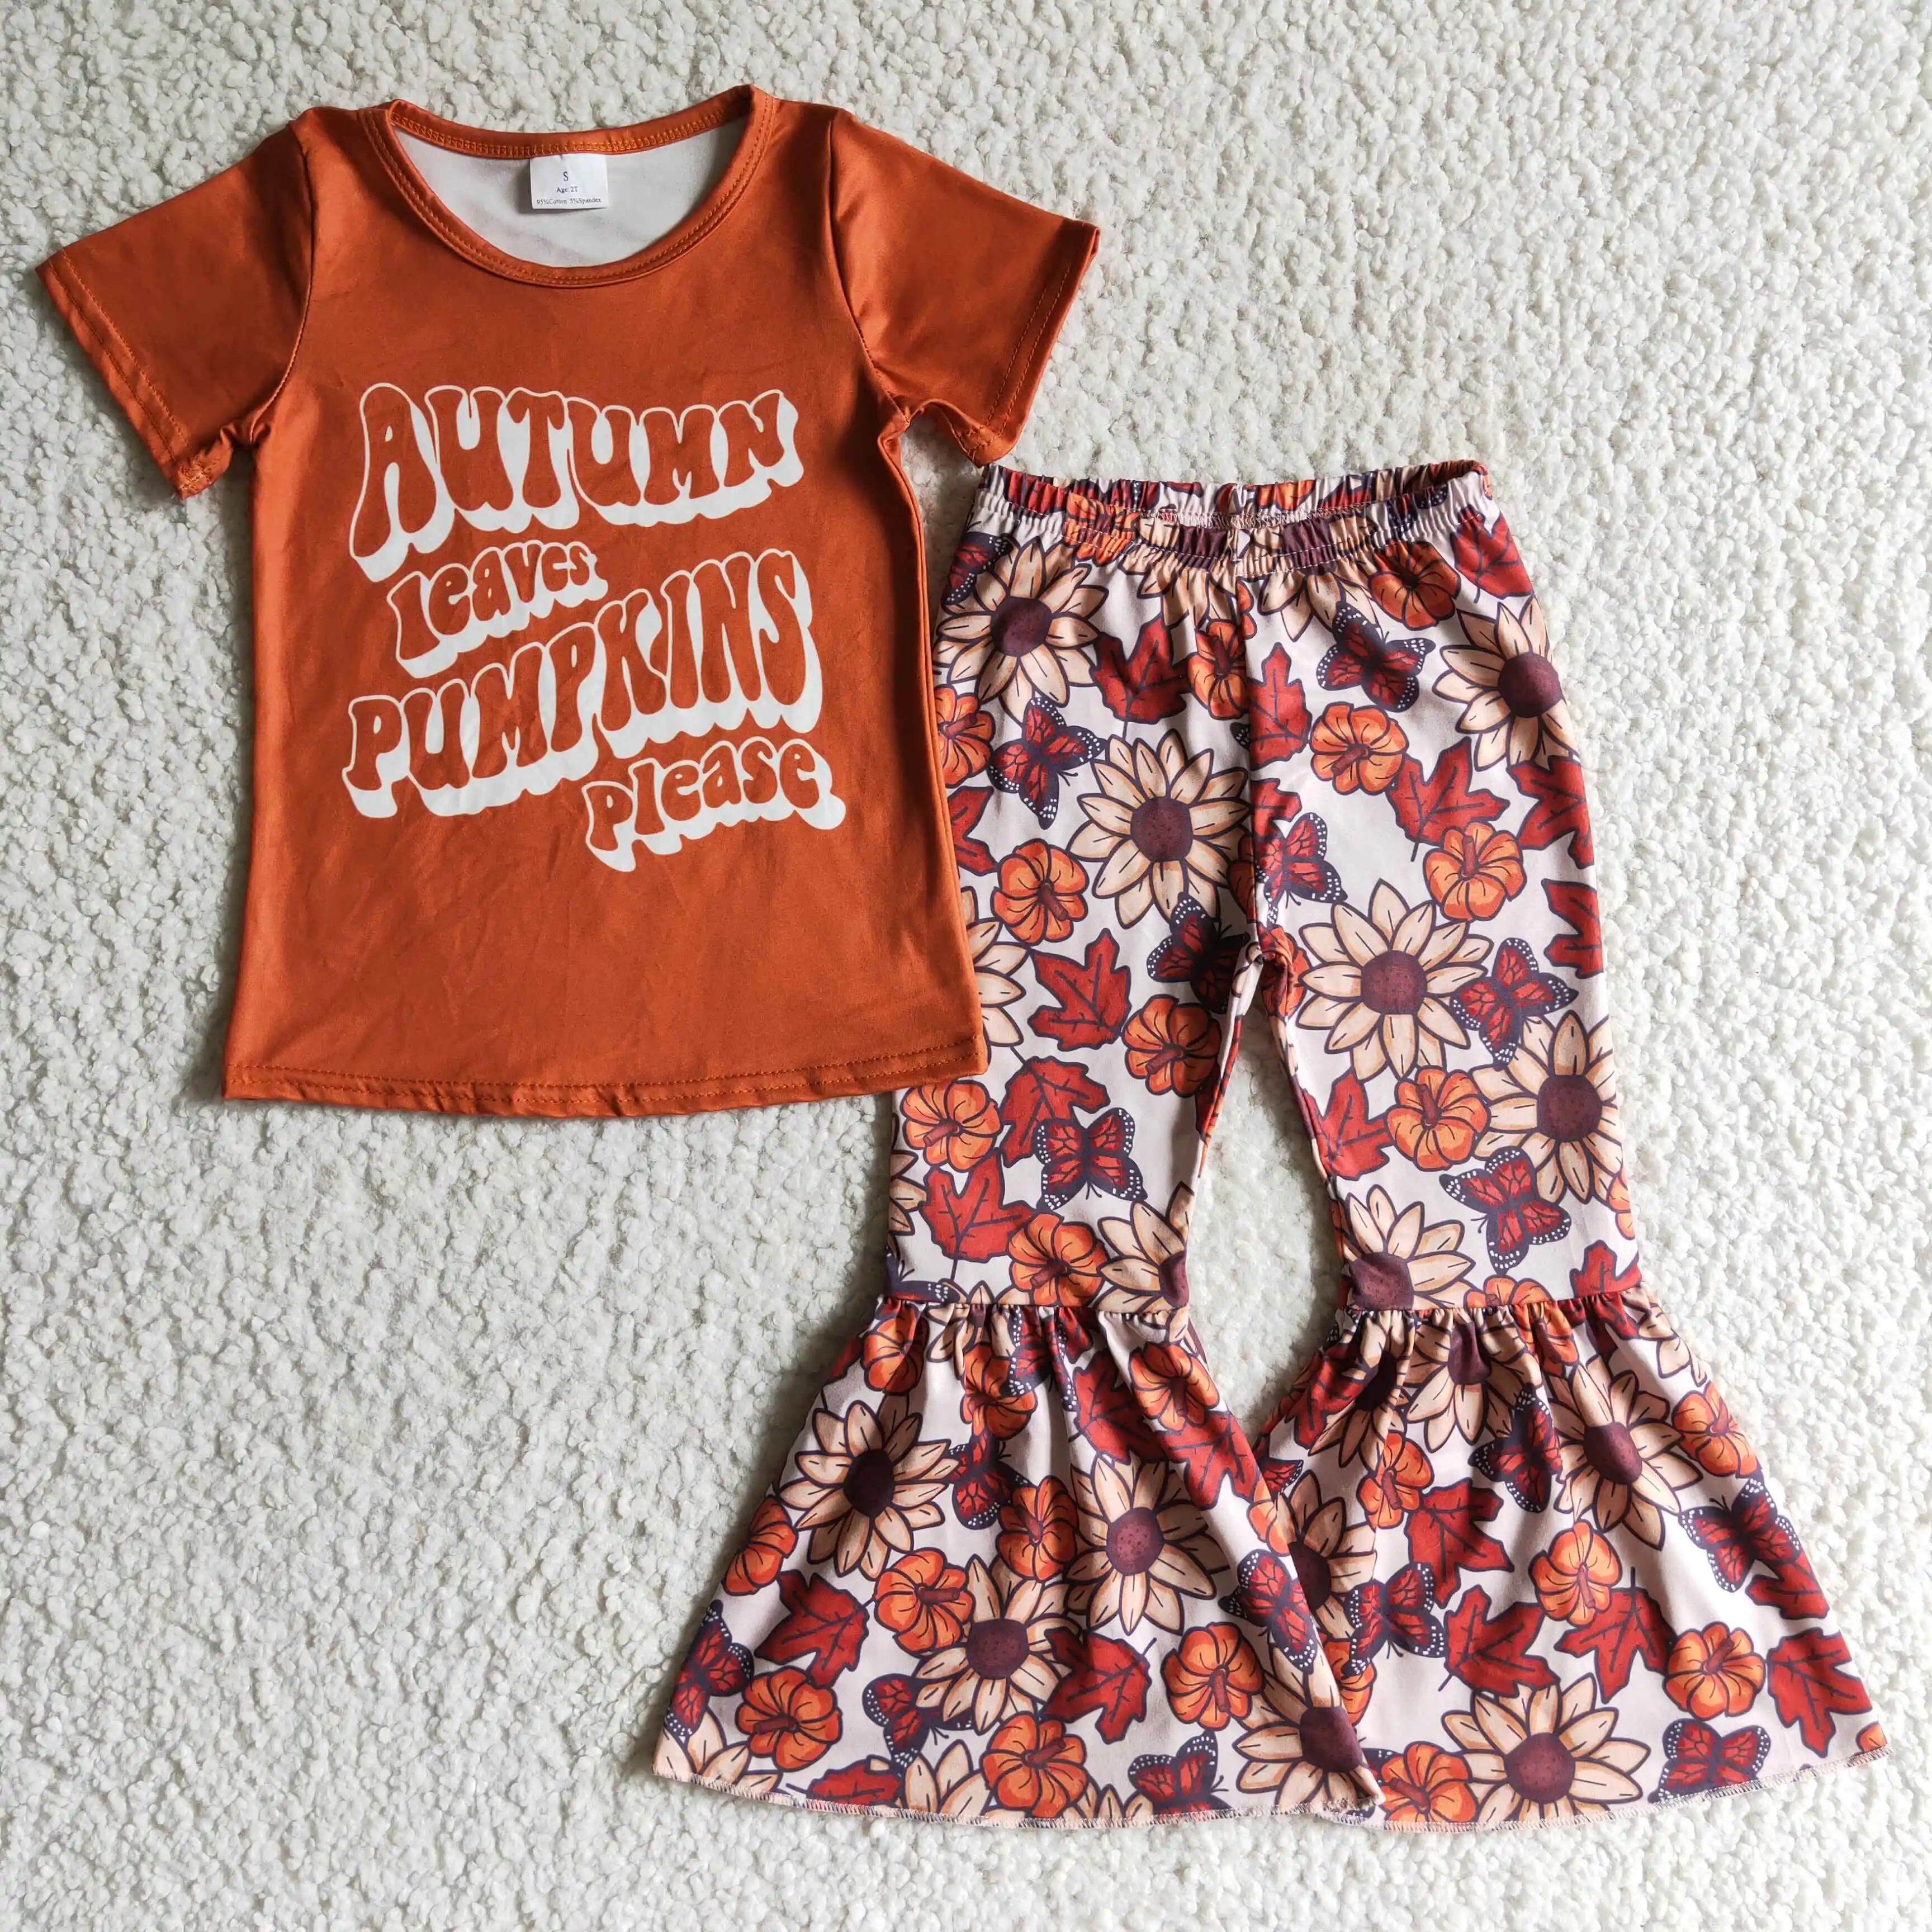 

Wholesale toddler set girl autumn leaves pumpkins please alphabet tops fall flower bell bottom pants outfits